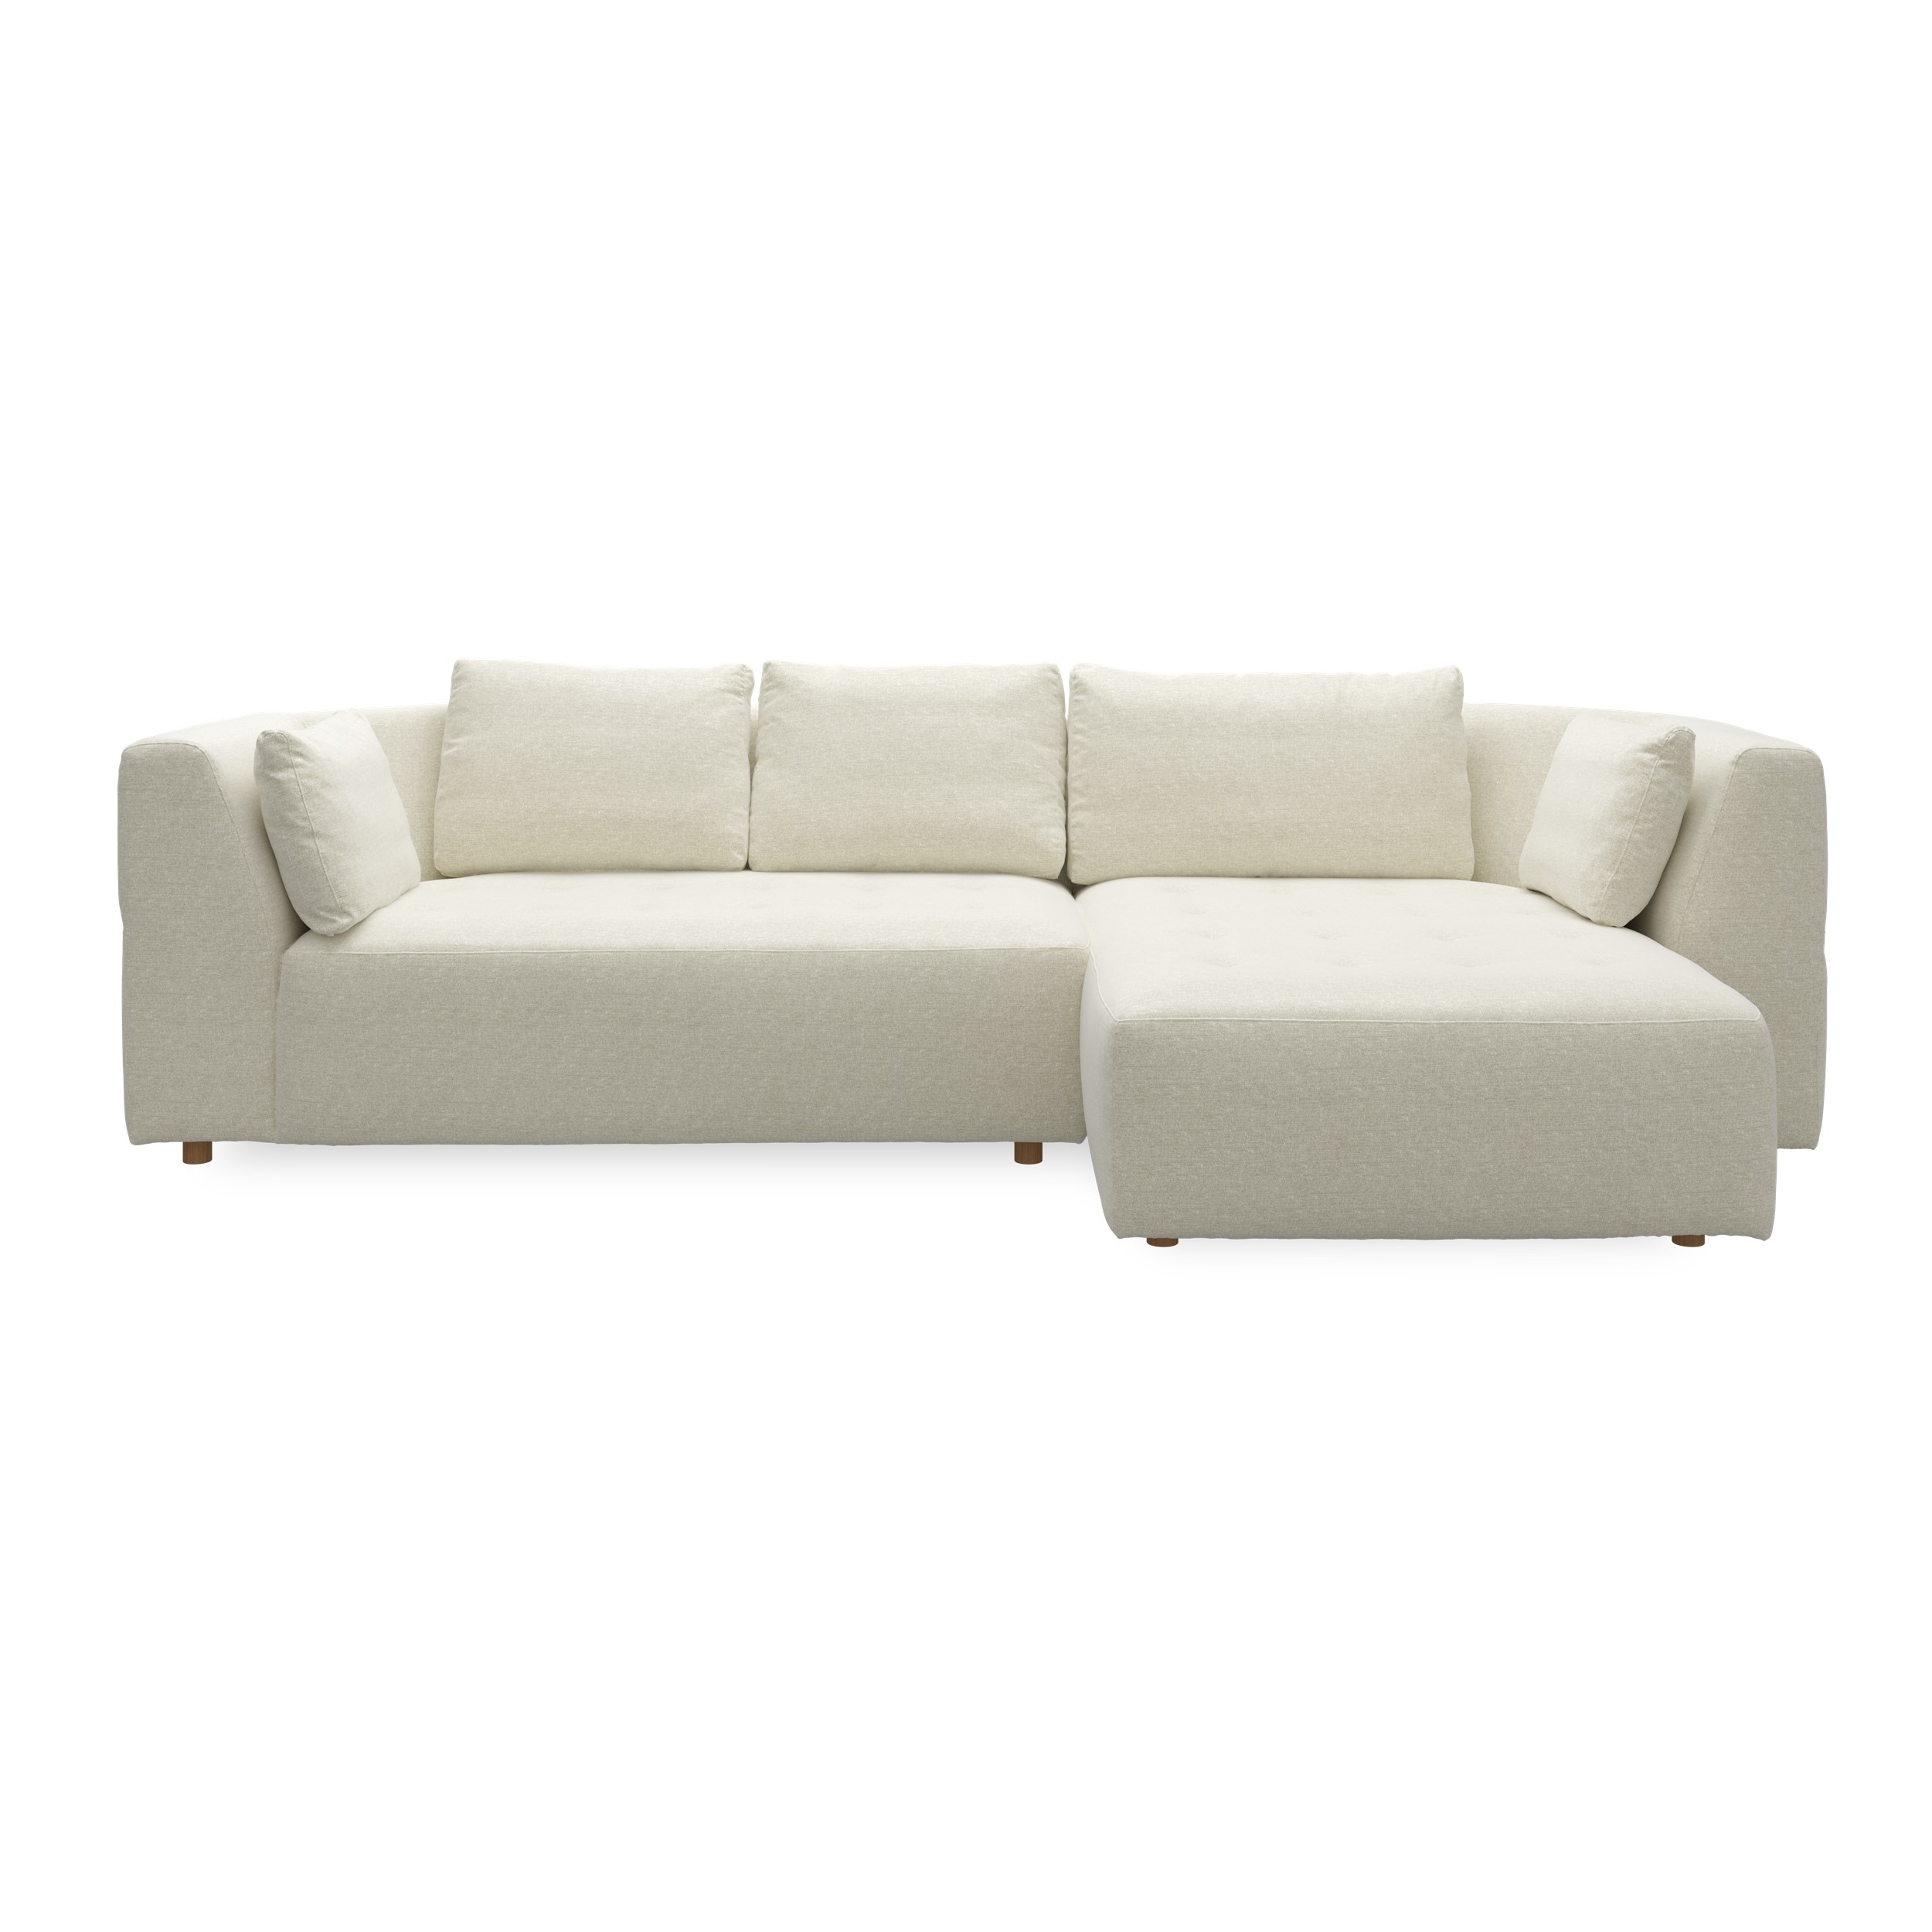 Walker högervänd soffa med schäslong - Caleido St. 2 beige textil, ben no . 173 natur ek och S: Kallskum R: Dun/Silikon